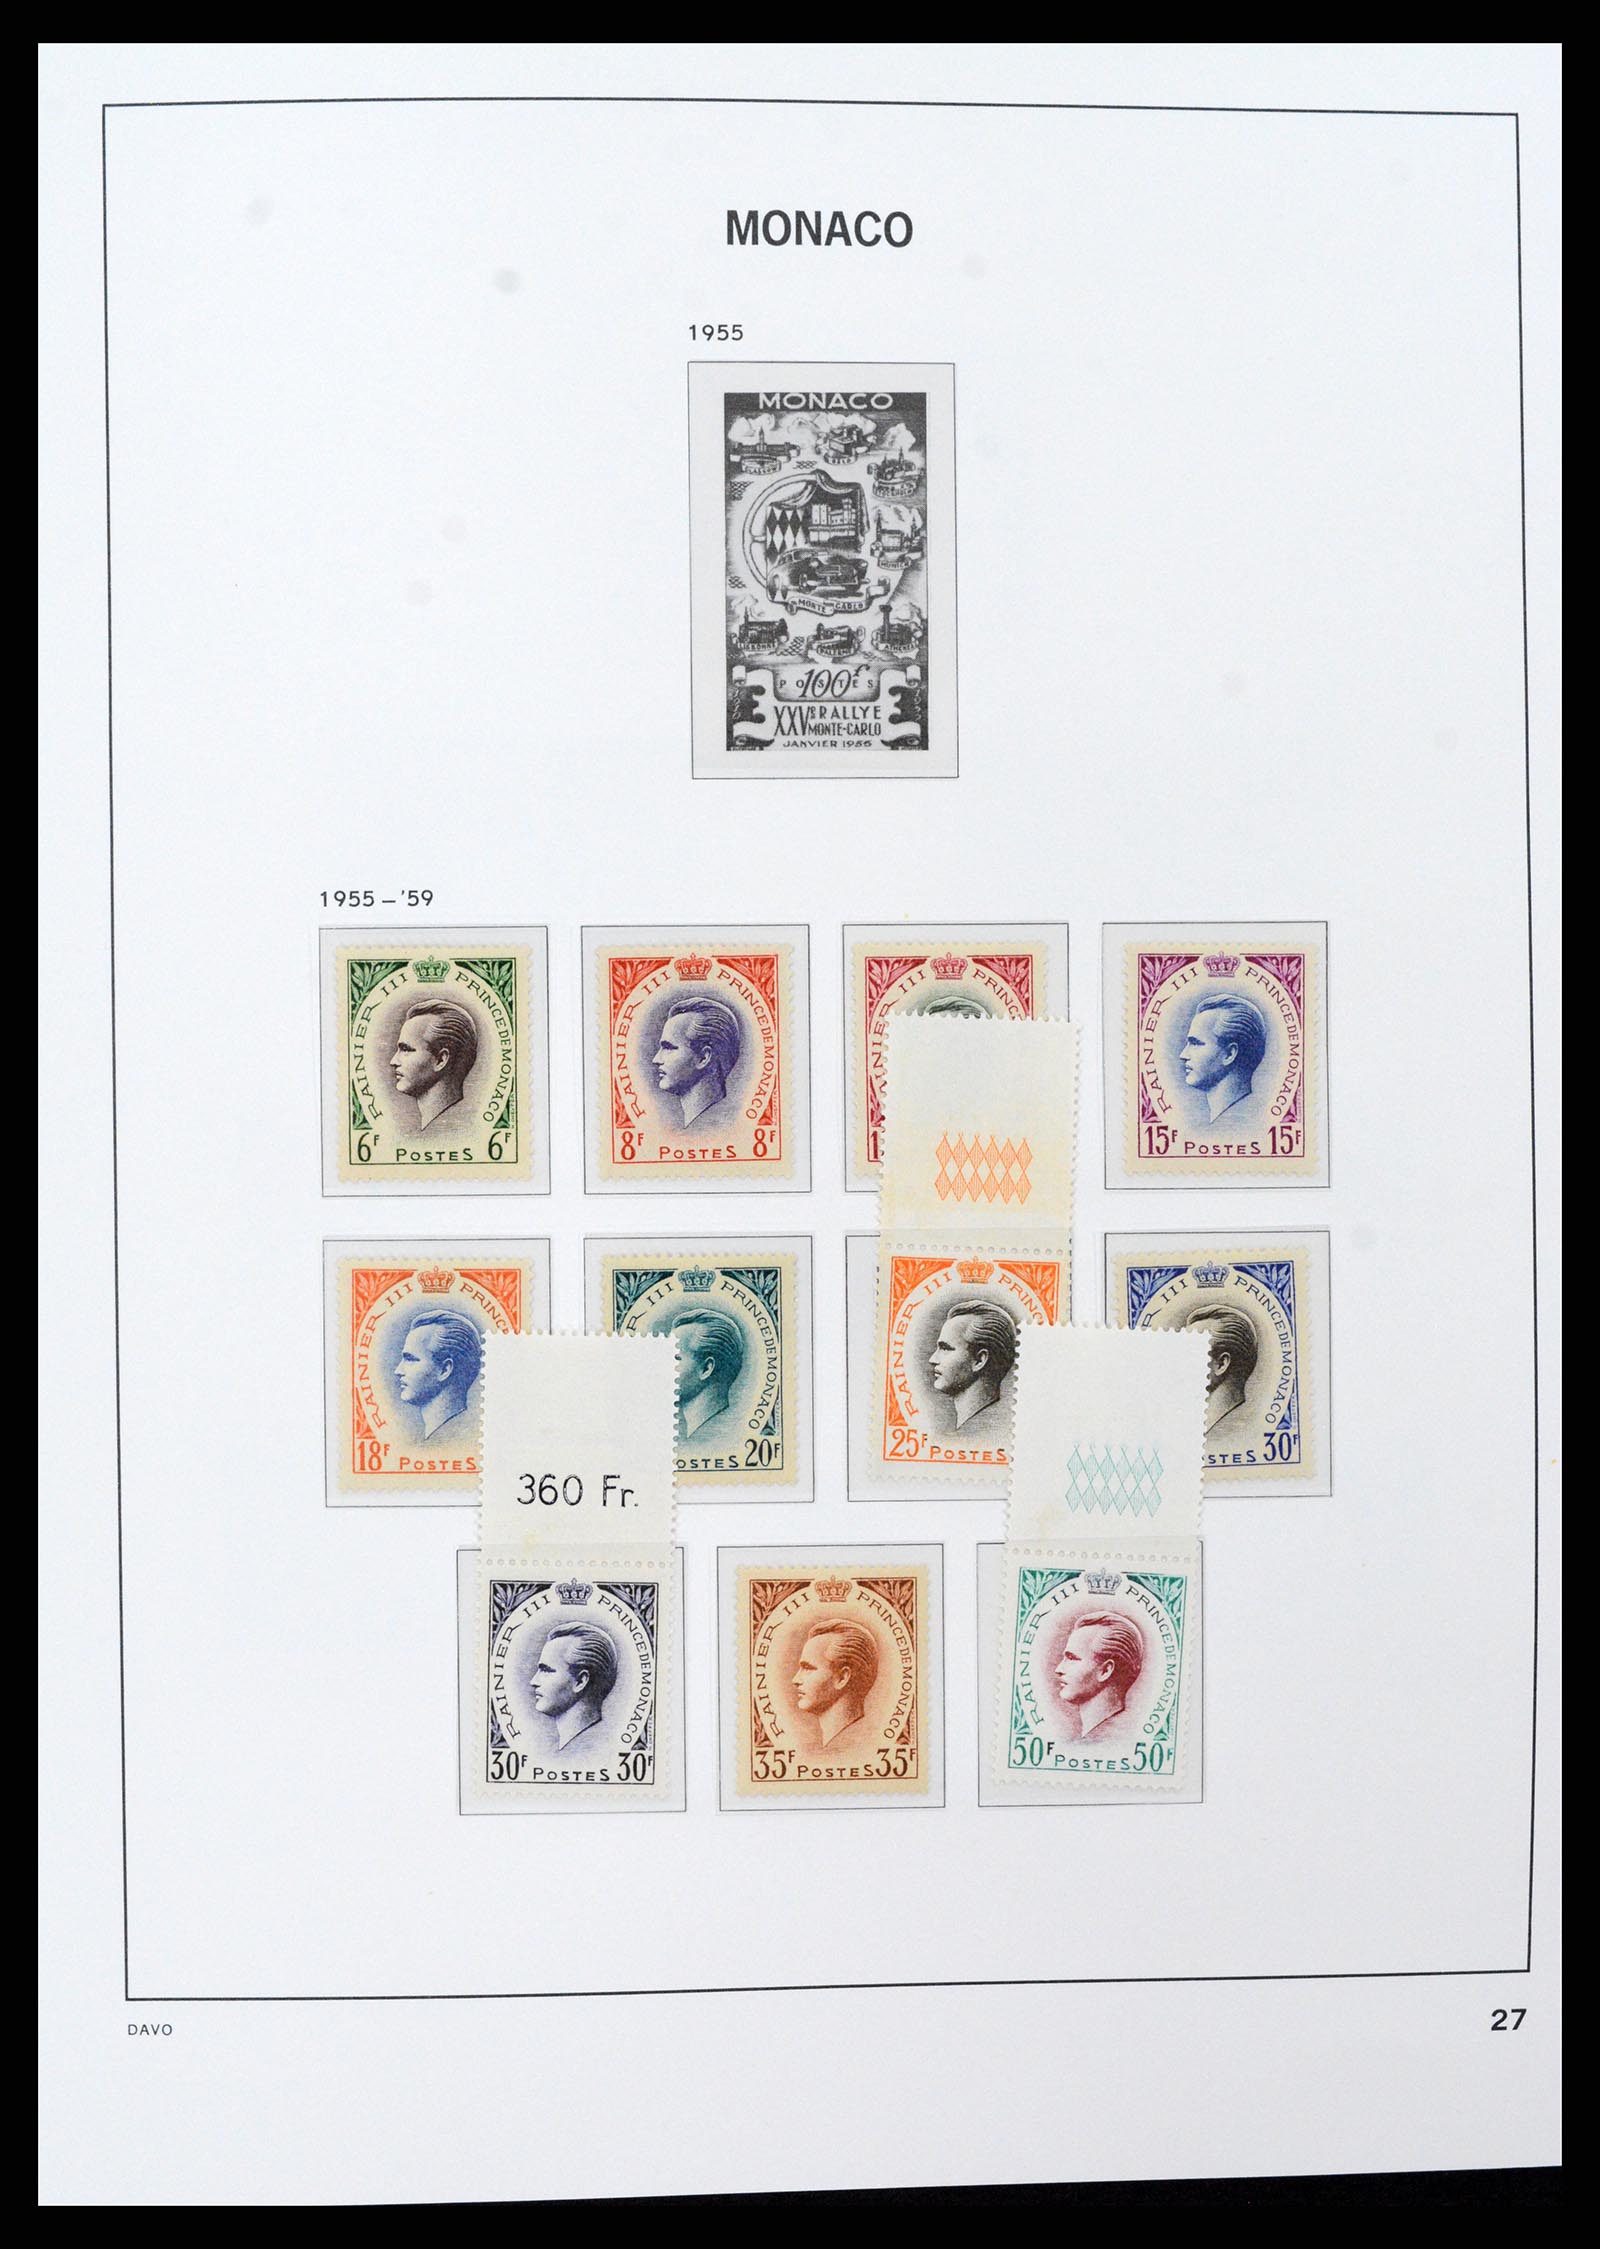 37279 027 - Stamp collection 37279 Monaco 1885-1969.